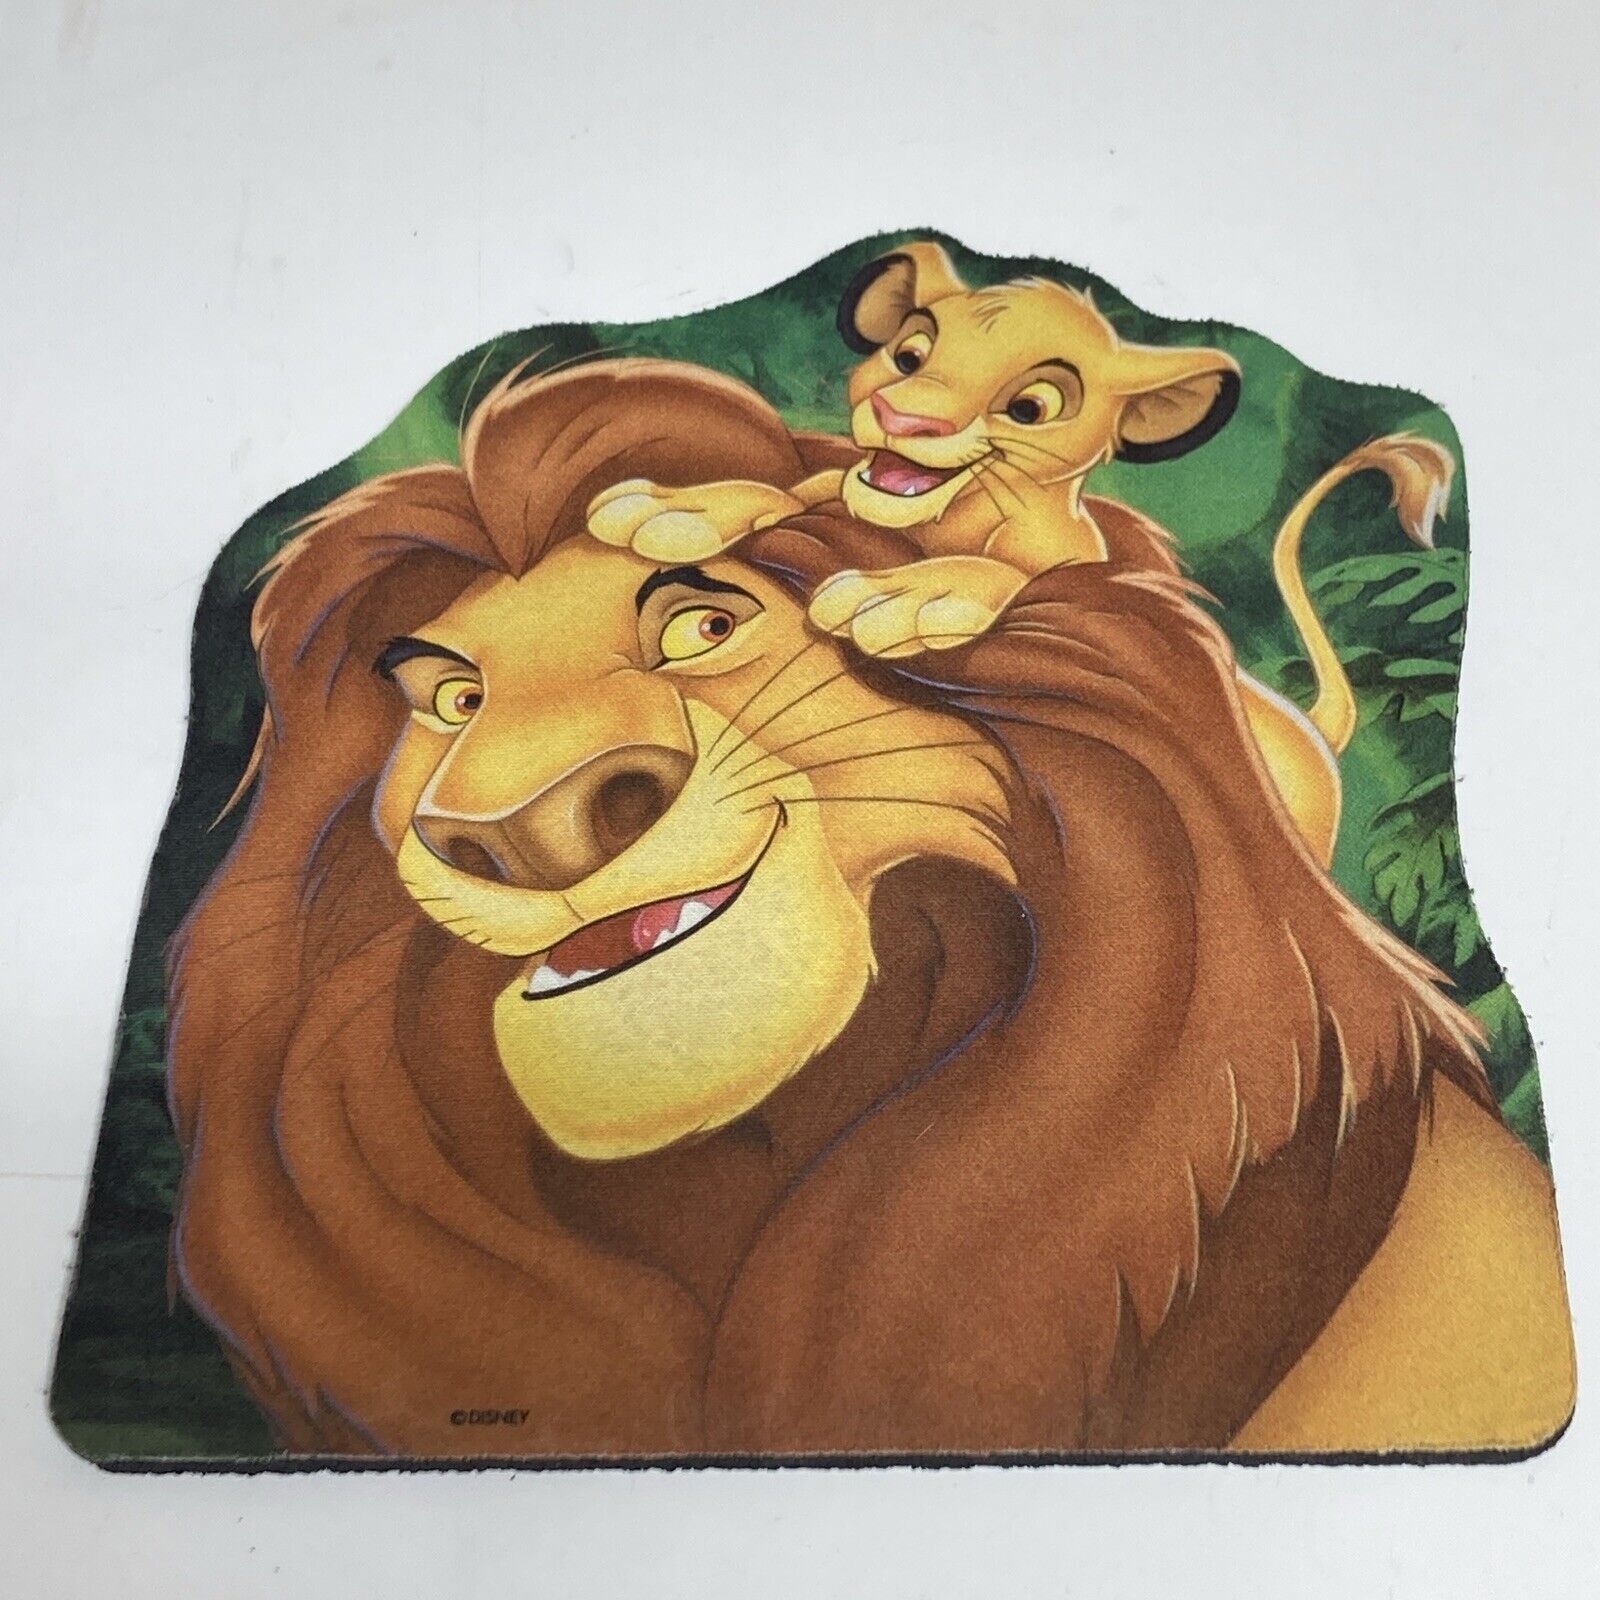 VTG 1990s Disney Lion King Mouse Pad Collectible 90s Simba Mufasa Unused